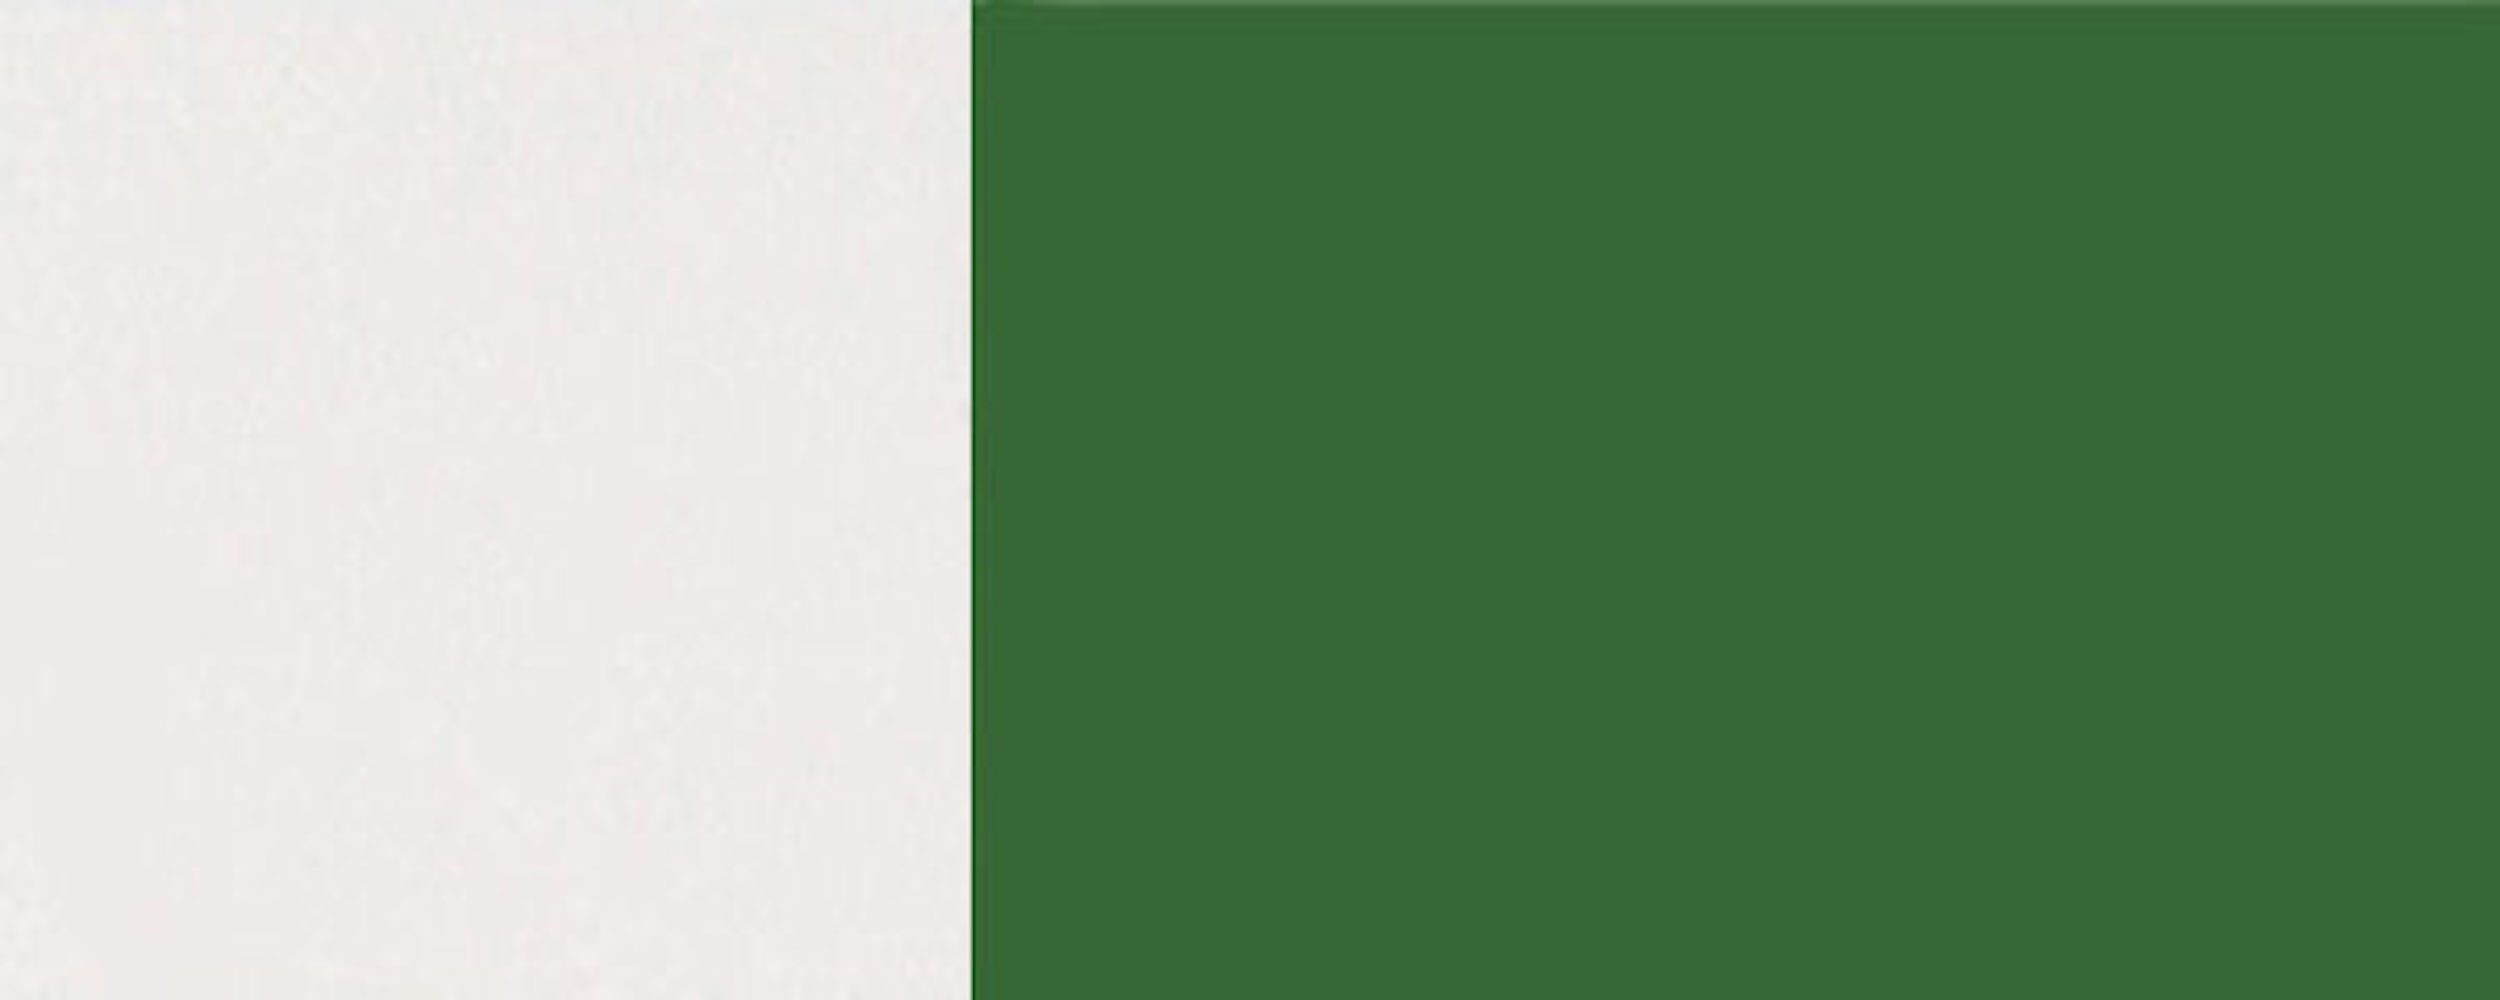 Feldmann-Wohnen Klapphängeschrank Florence 6001 wählbar RAL 2-türig und Front- smaragdgrün Hochglanz (Florence) 80cm grifflos Korpusfarbe